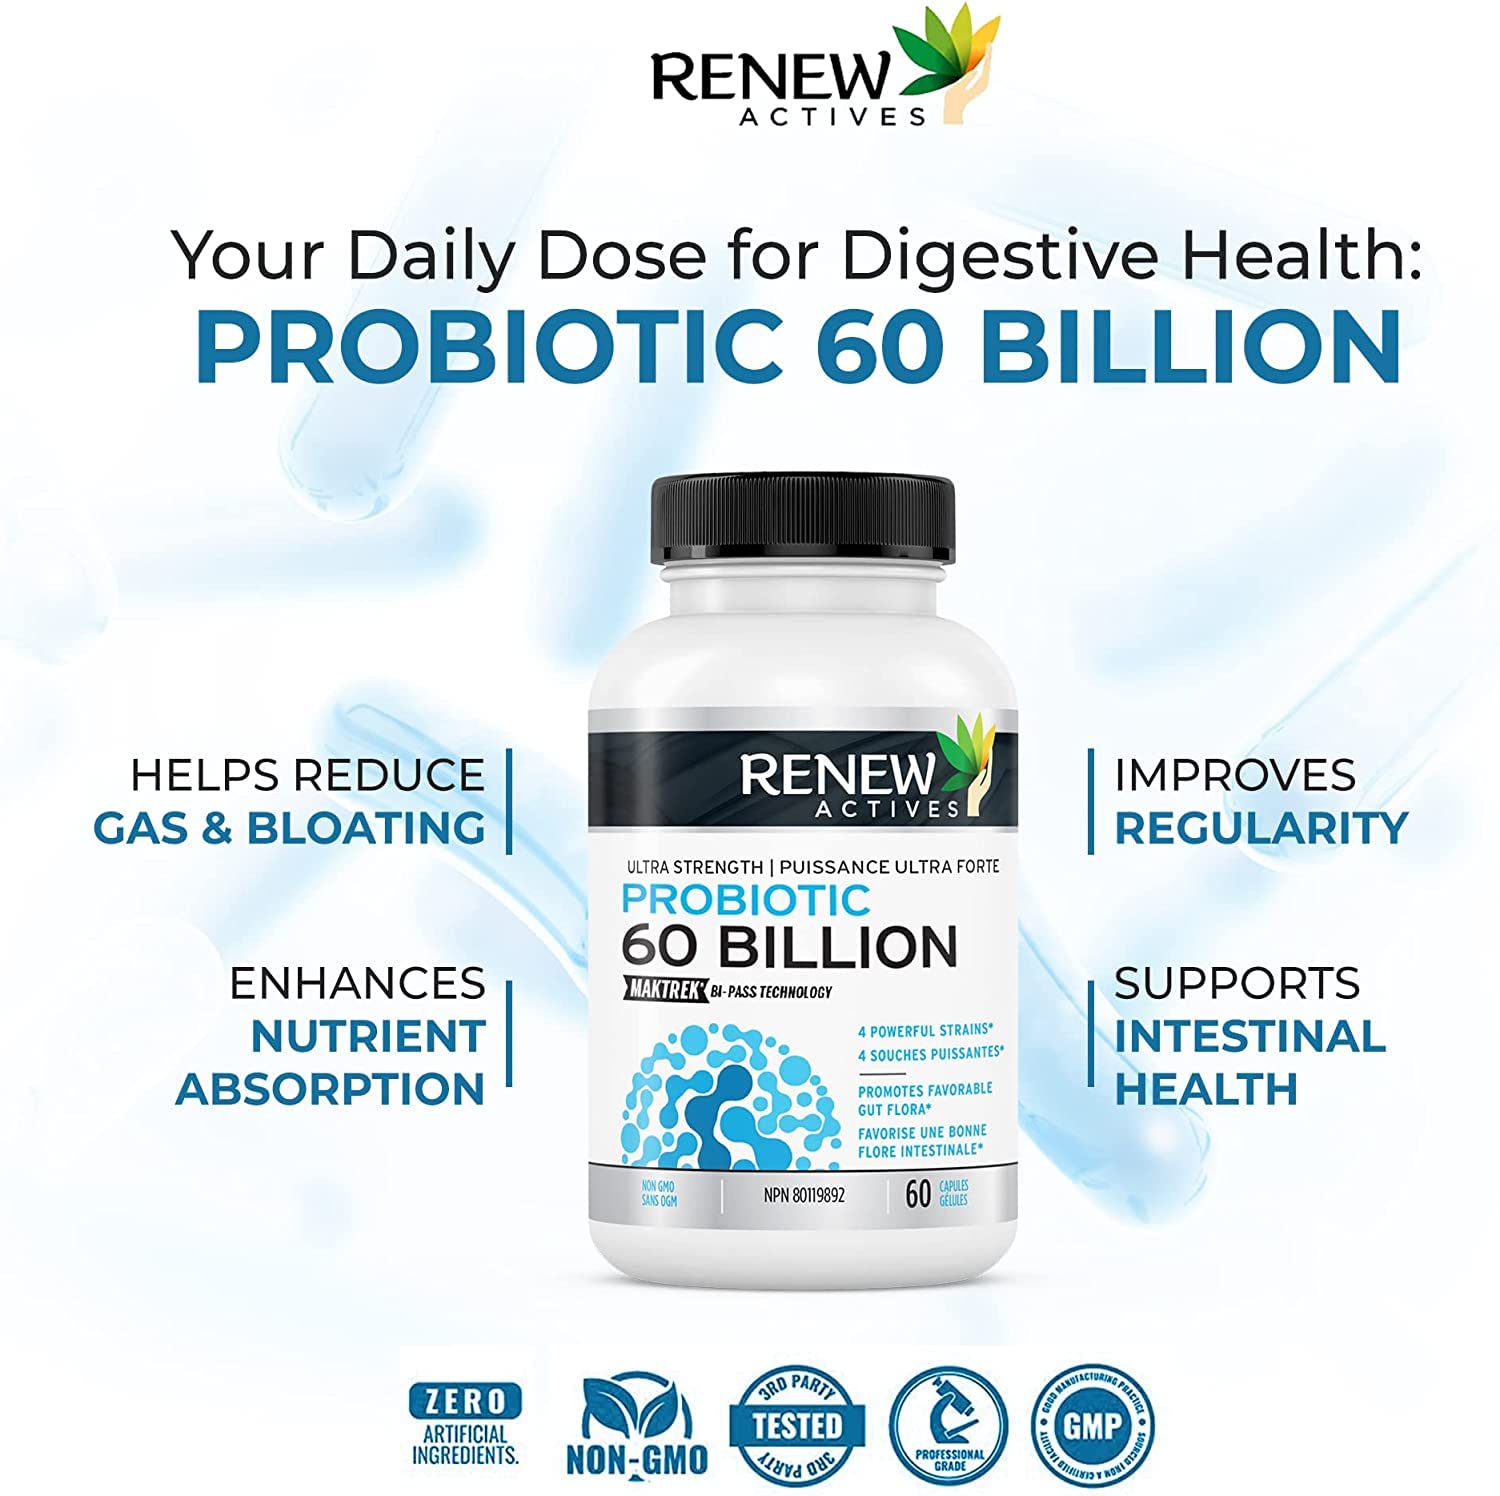 Renew Actives Probiotics 60 Billion CFU with MAKTREK Bi-Pass Technology - 60 Capsules